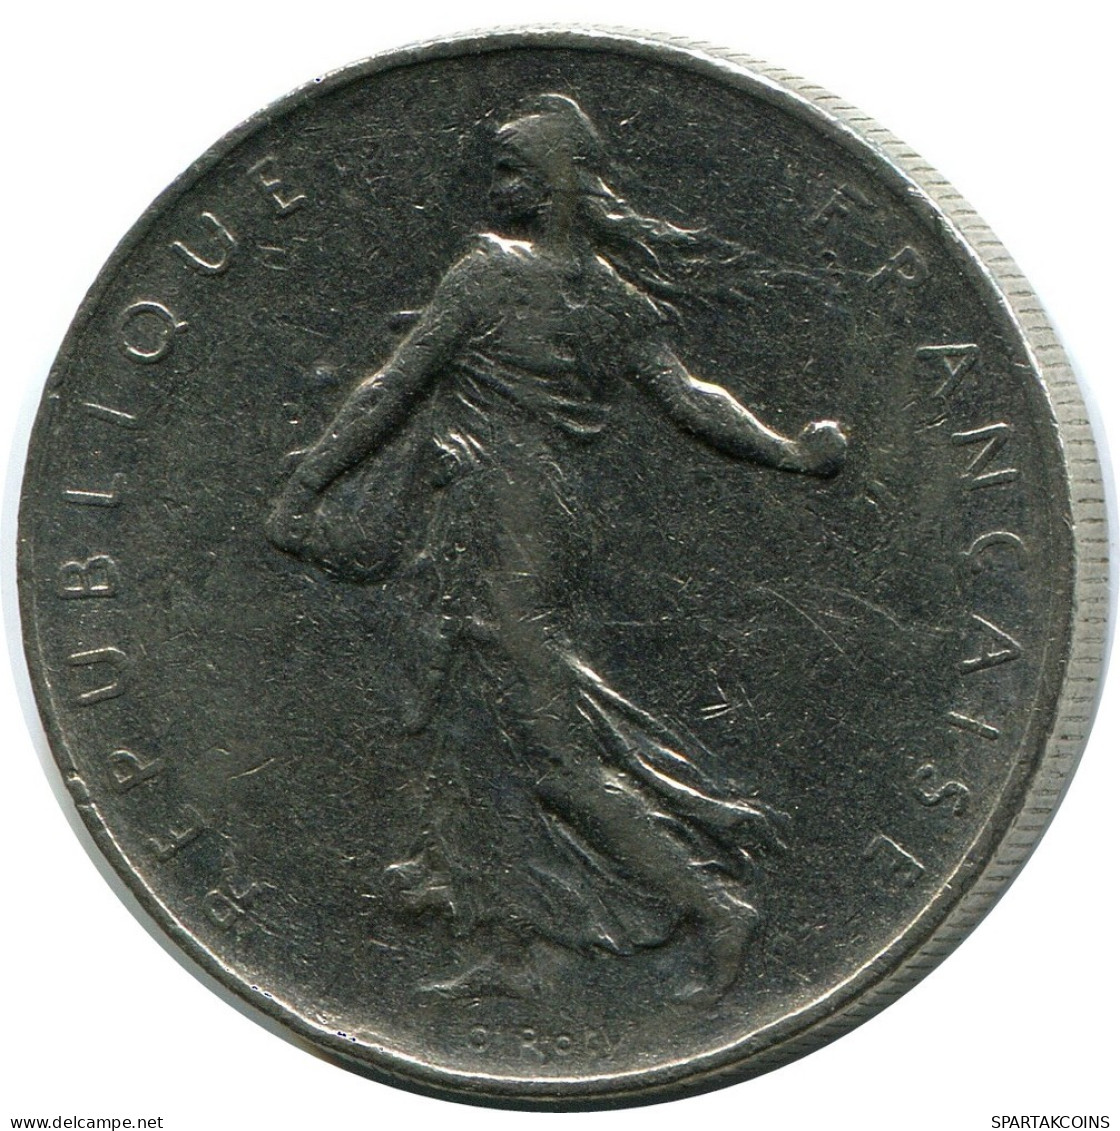 1 FRANC 1972 FRANKREICH FRANCE Französisch Münze #AZ417.D.A - 1 Franc